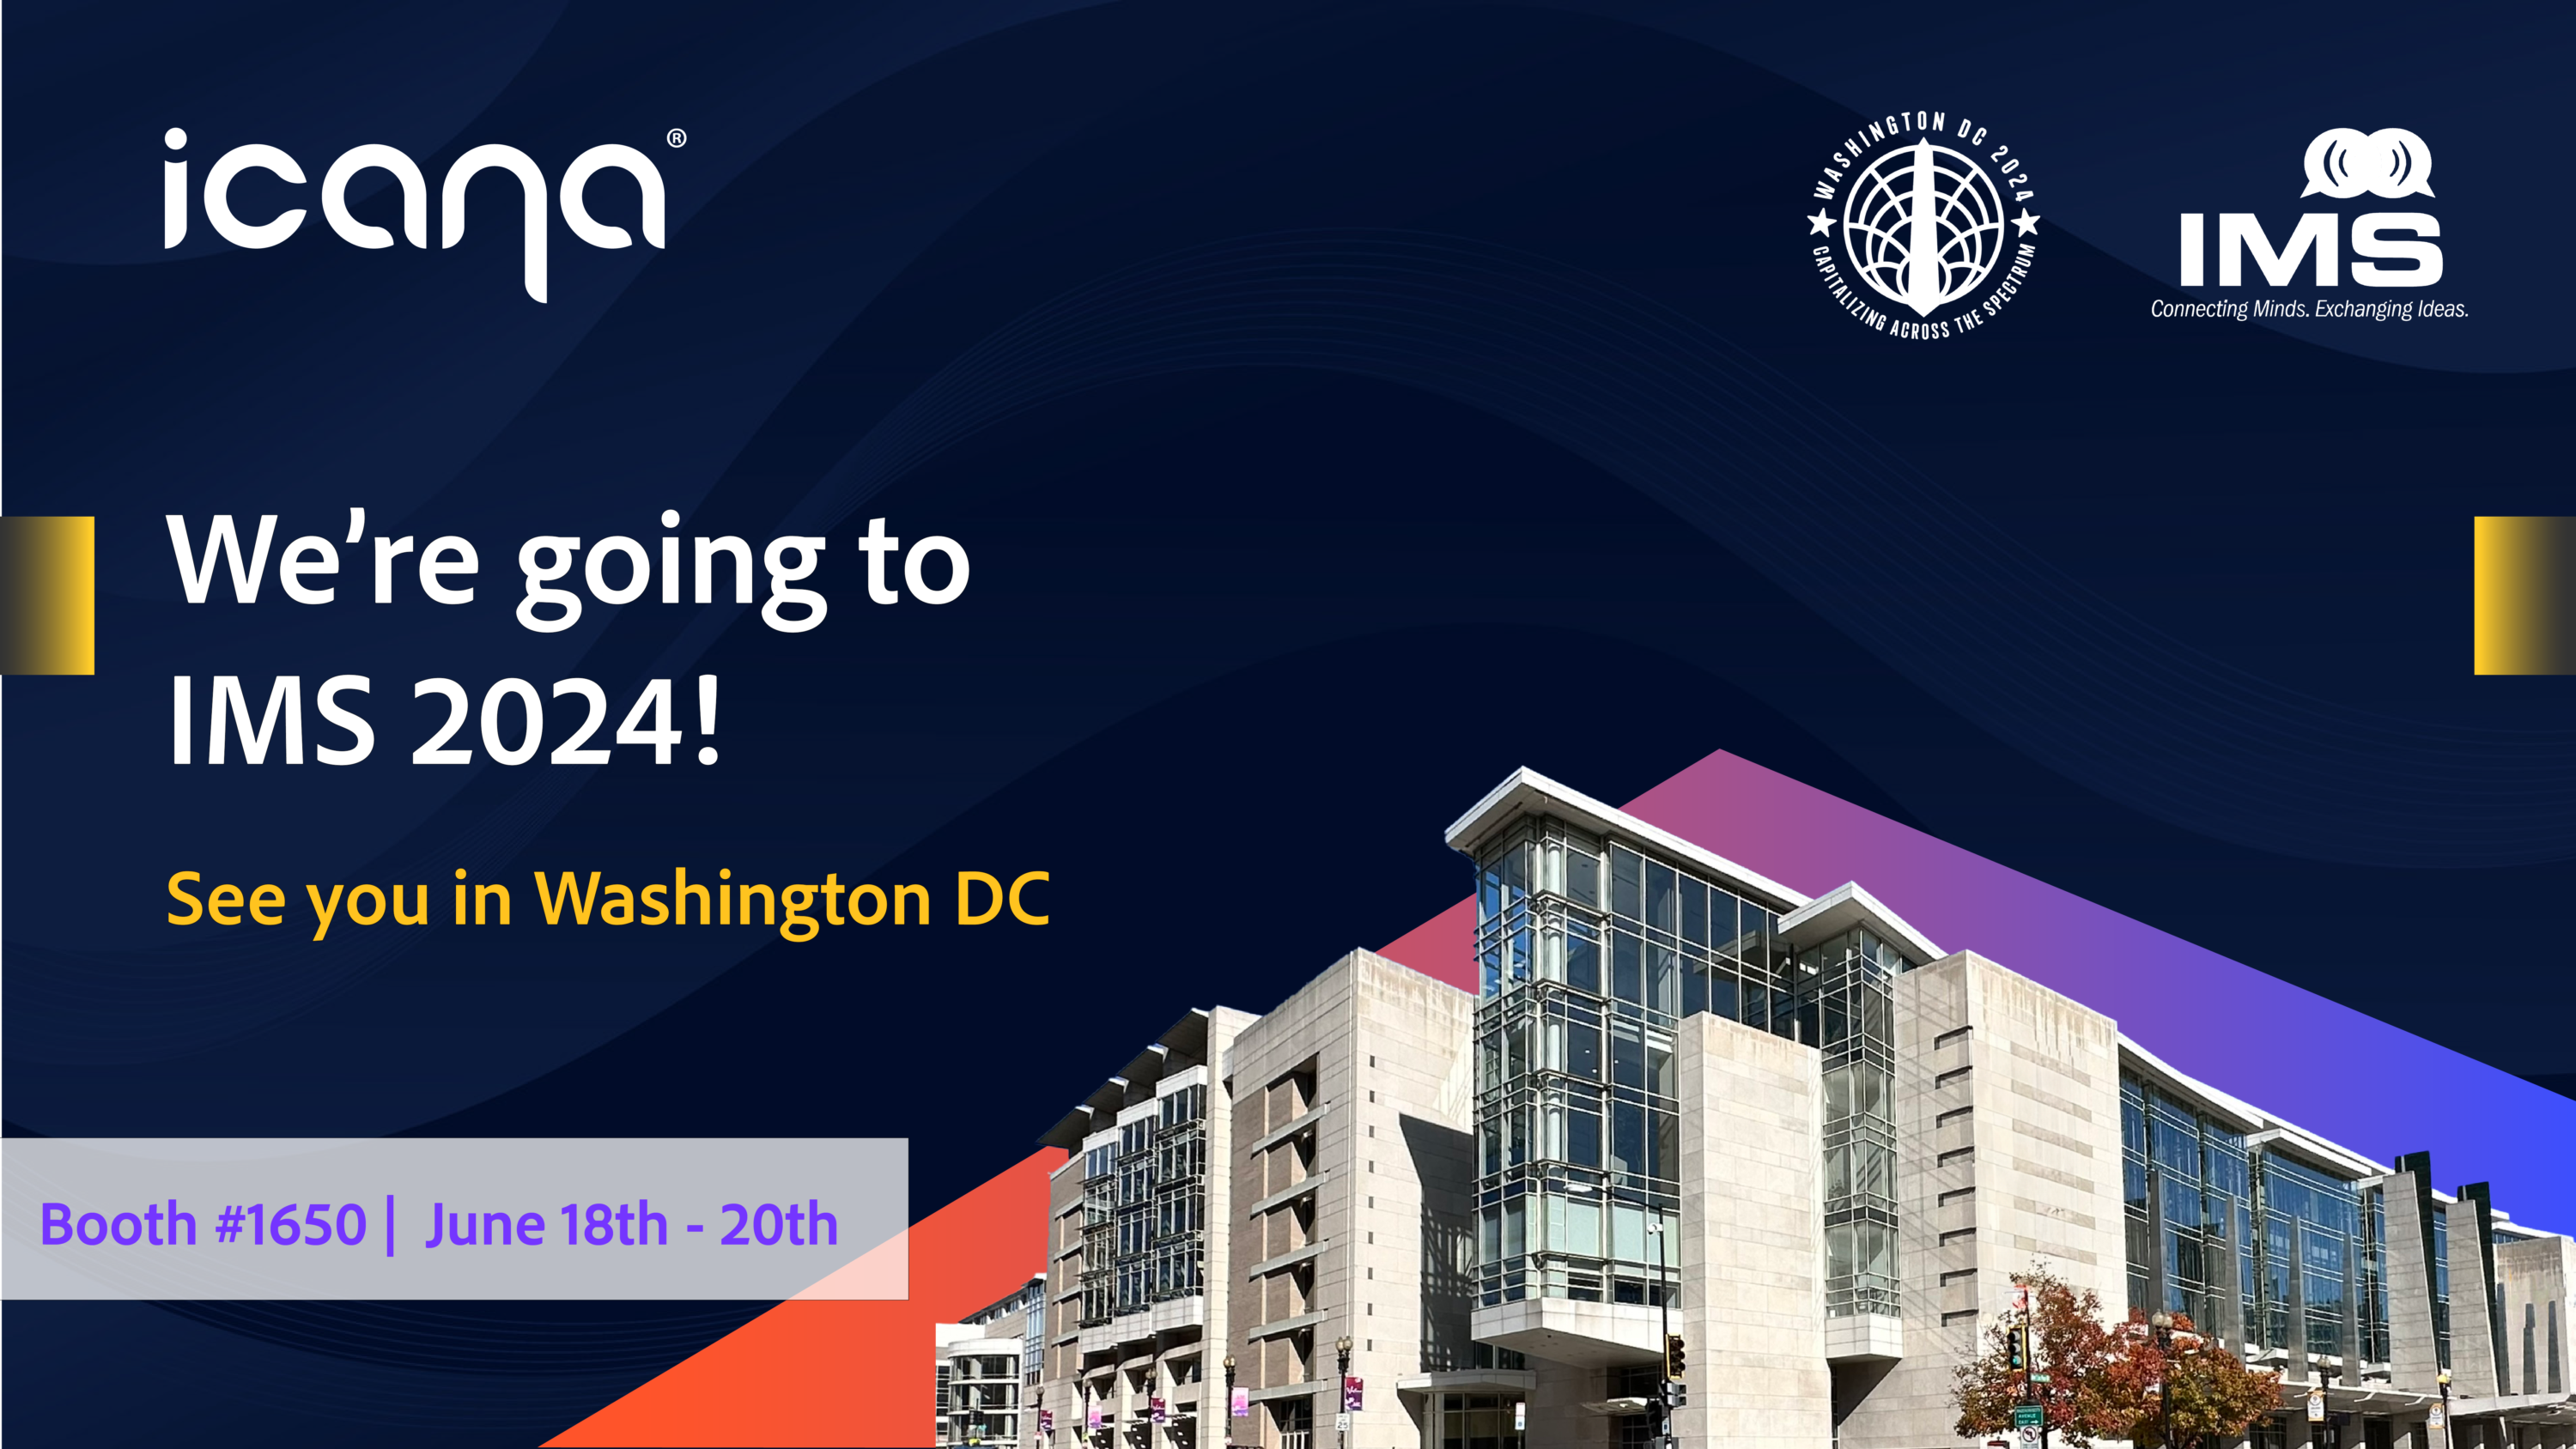 Join iCana at IMS 2024 in Washington DC!